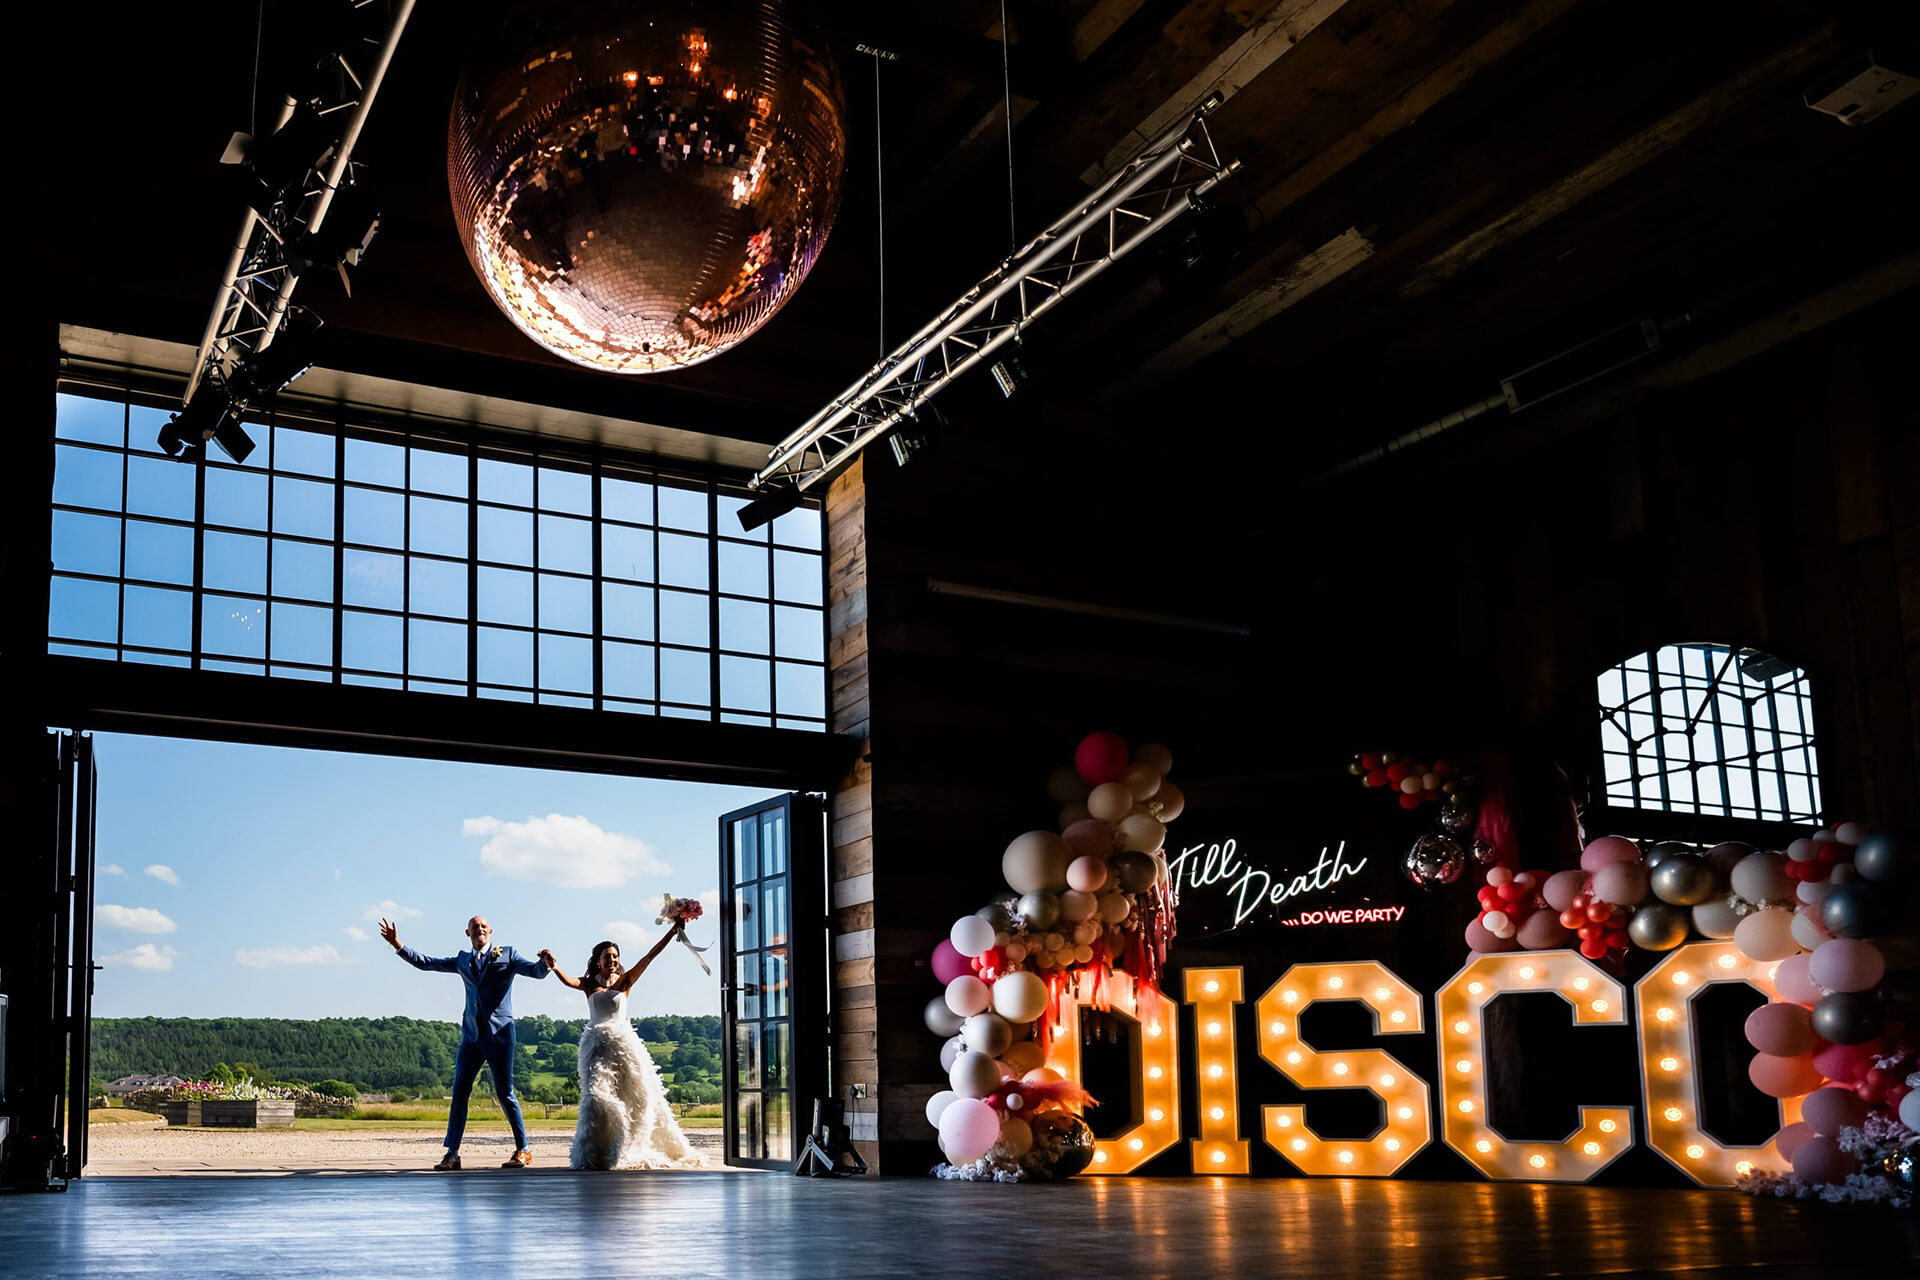 Wedding couple dancing under disco sign in rustic venue.